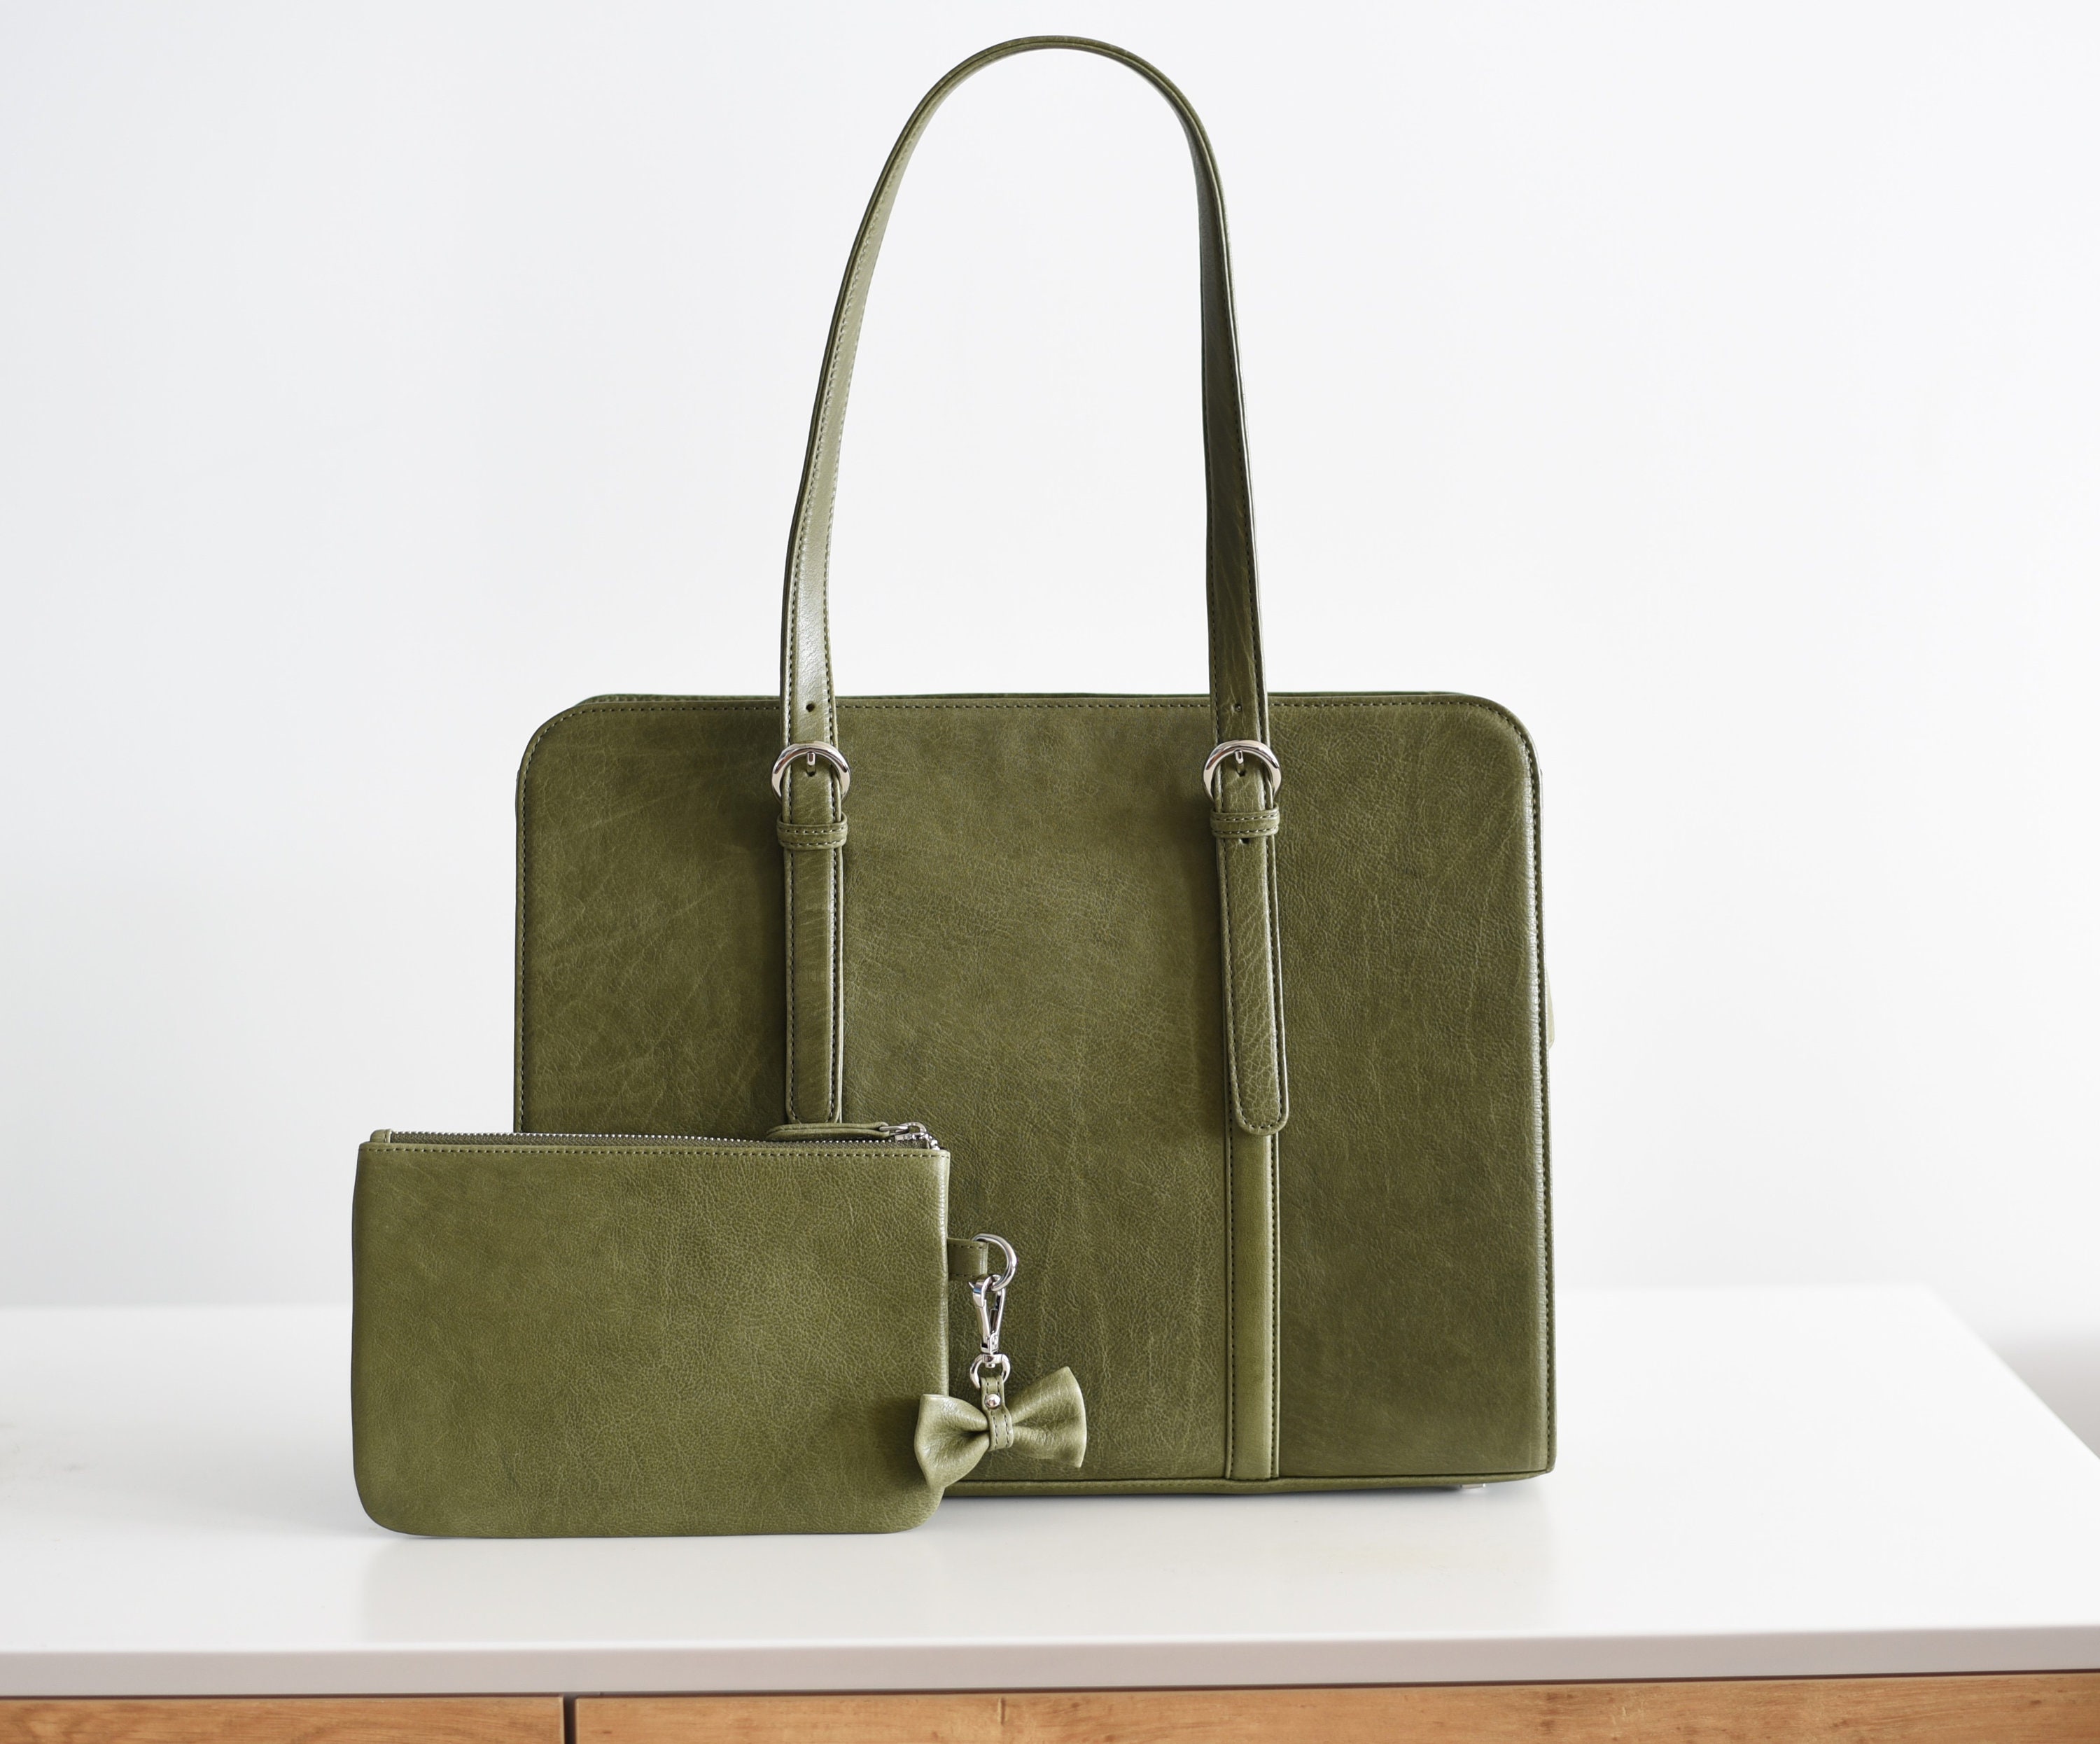 LV Sling Bag - Mens Bag - Premium Bags - Ask For Model Models for